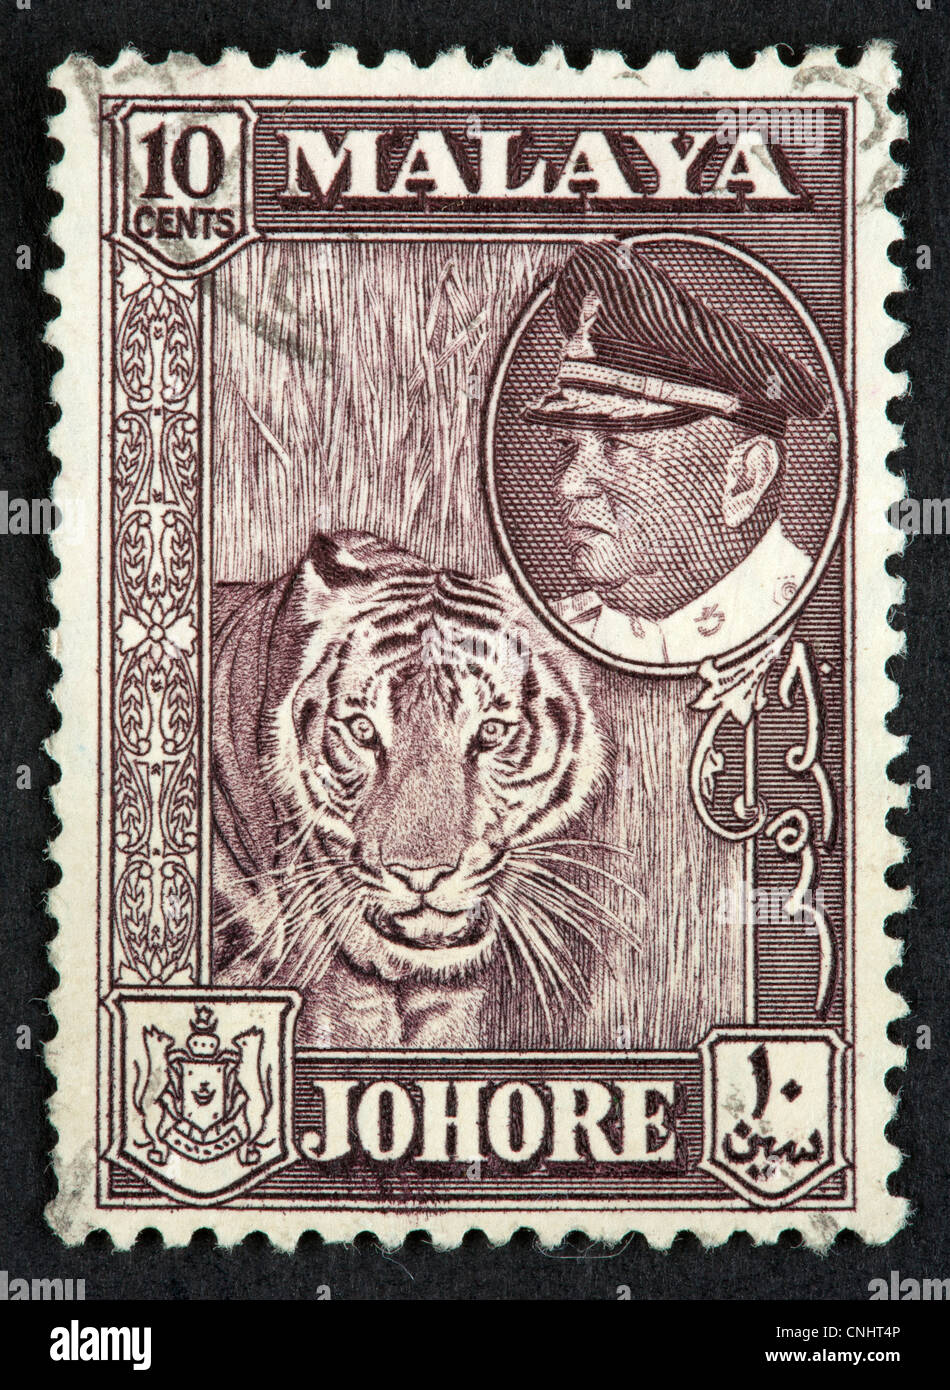 Malaya-Briefmarke Stockfoto